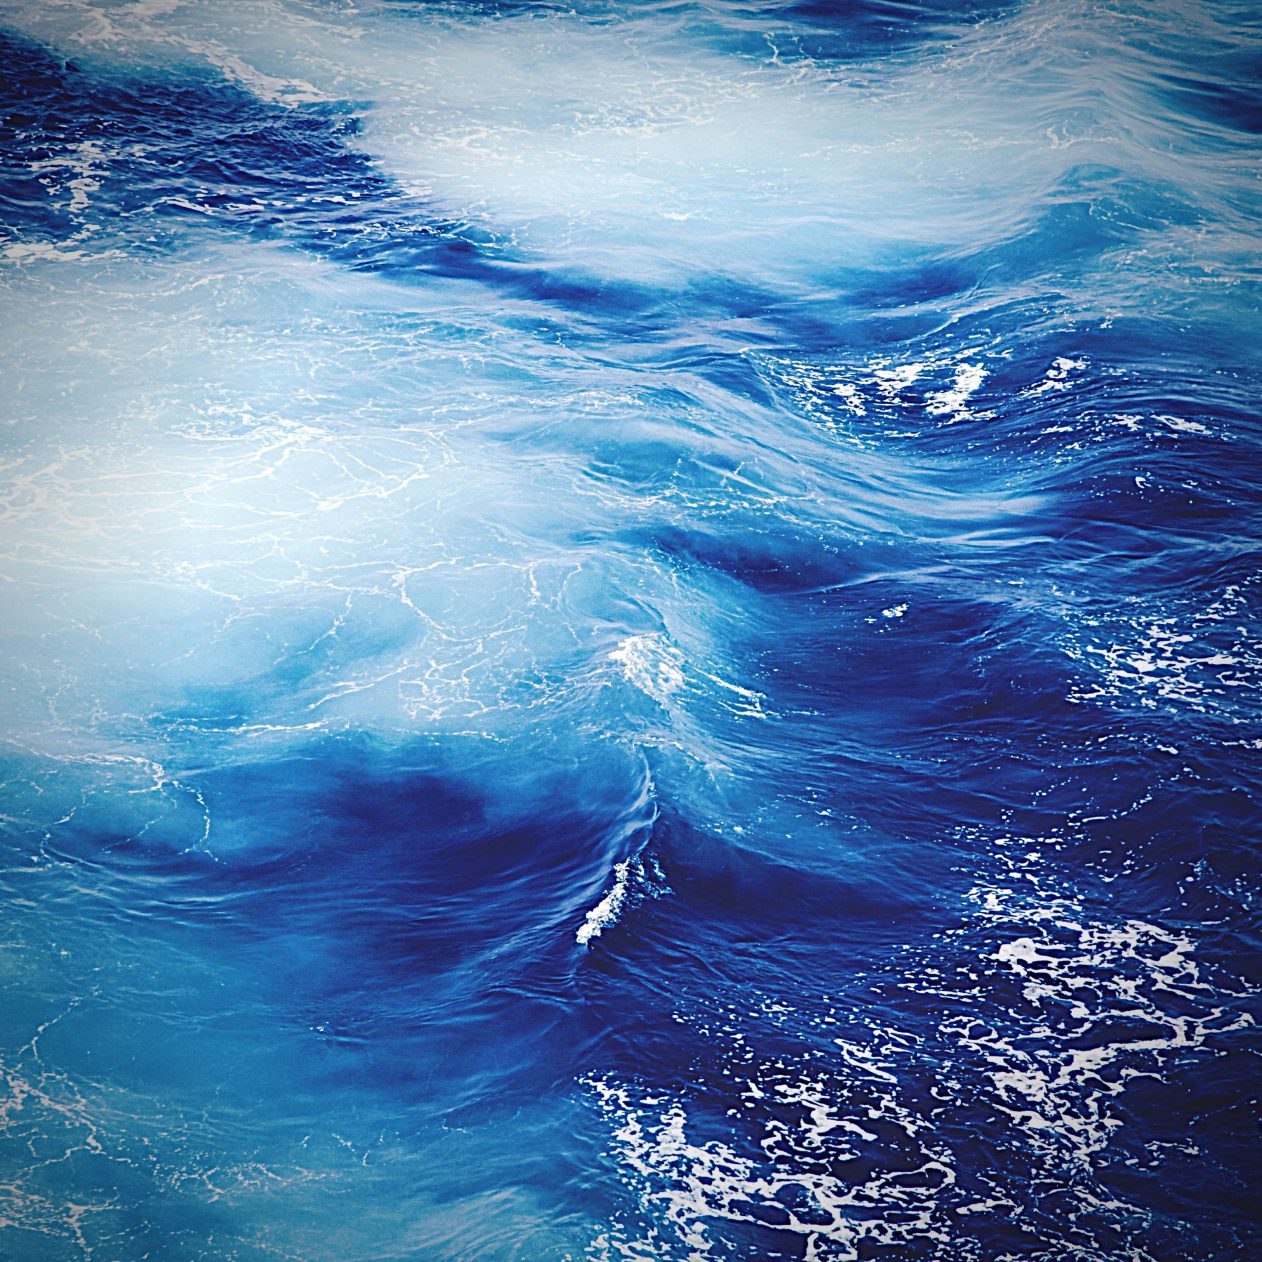 1262x1262 Parallax wallpaper 4k Ocean Sea Water Wave Blue iPad Wallpaper 1262x1262 pixels resolution